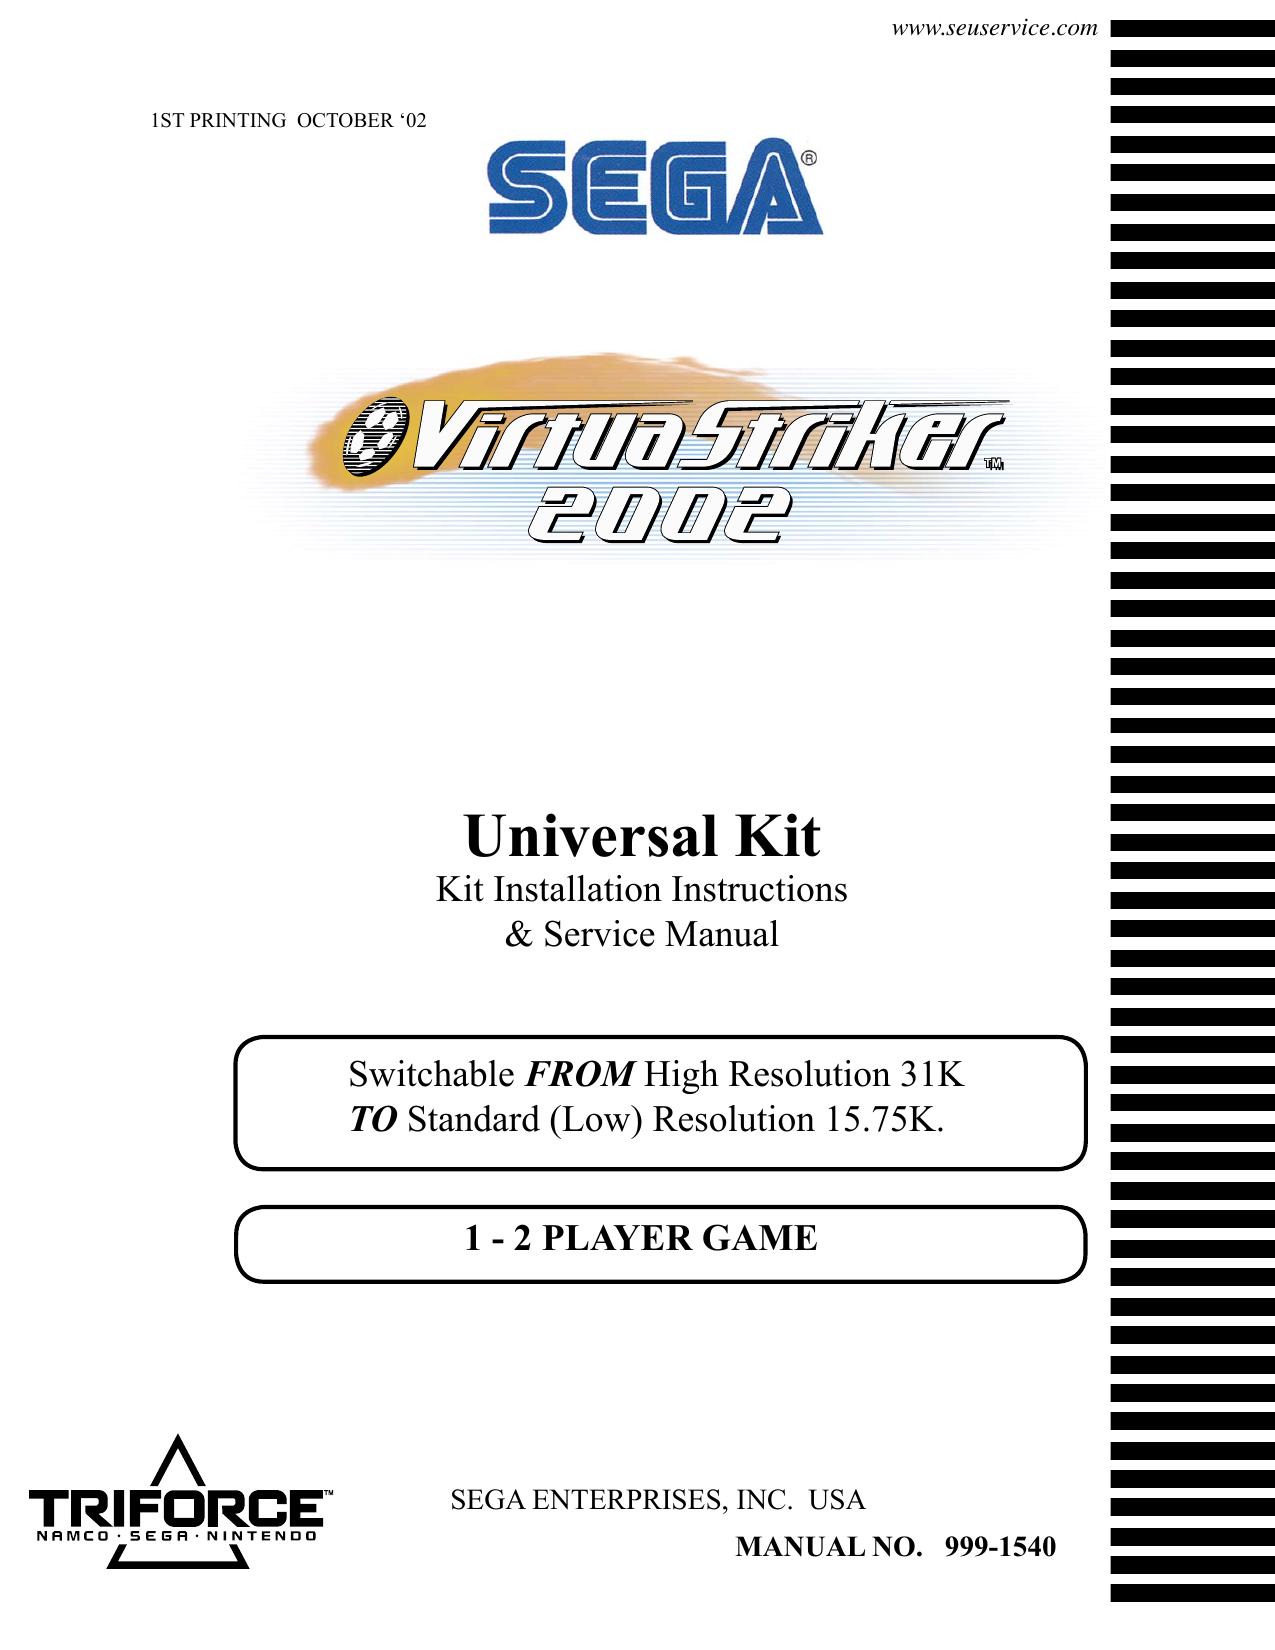 Sega Triforce Virtua Striker 2002 Manuel